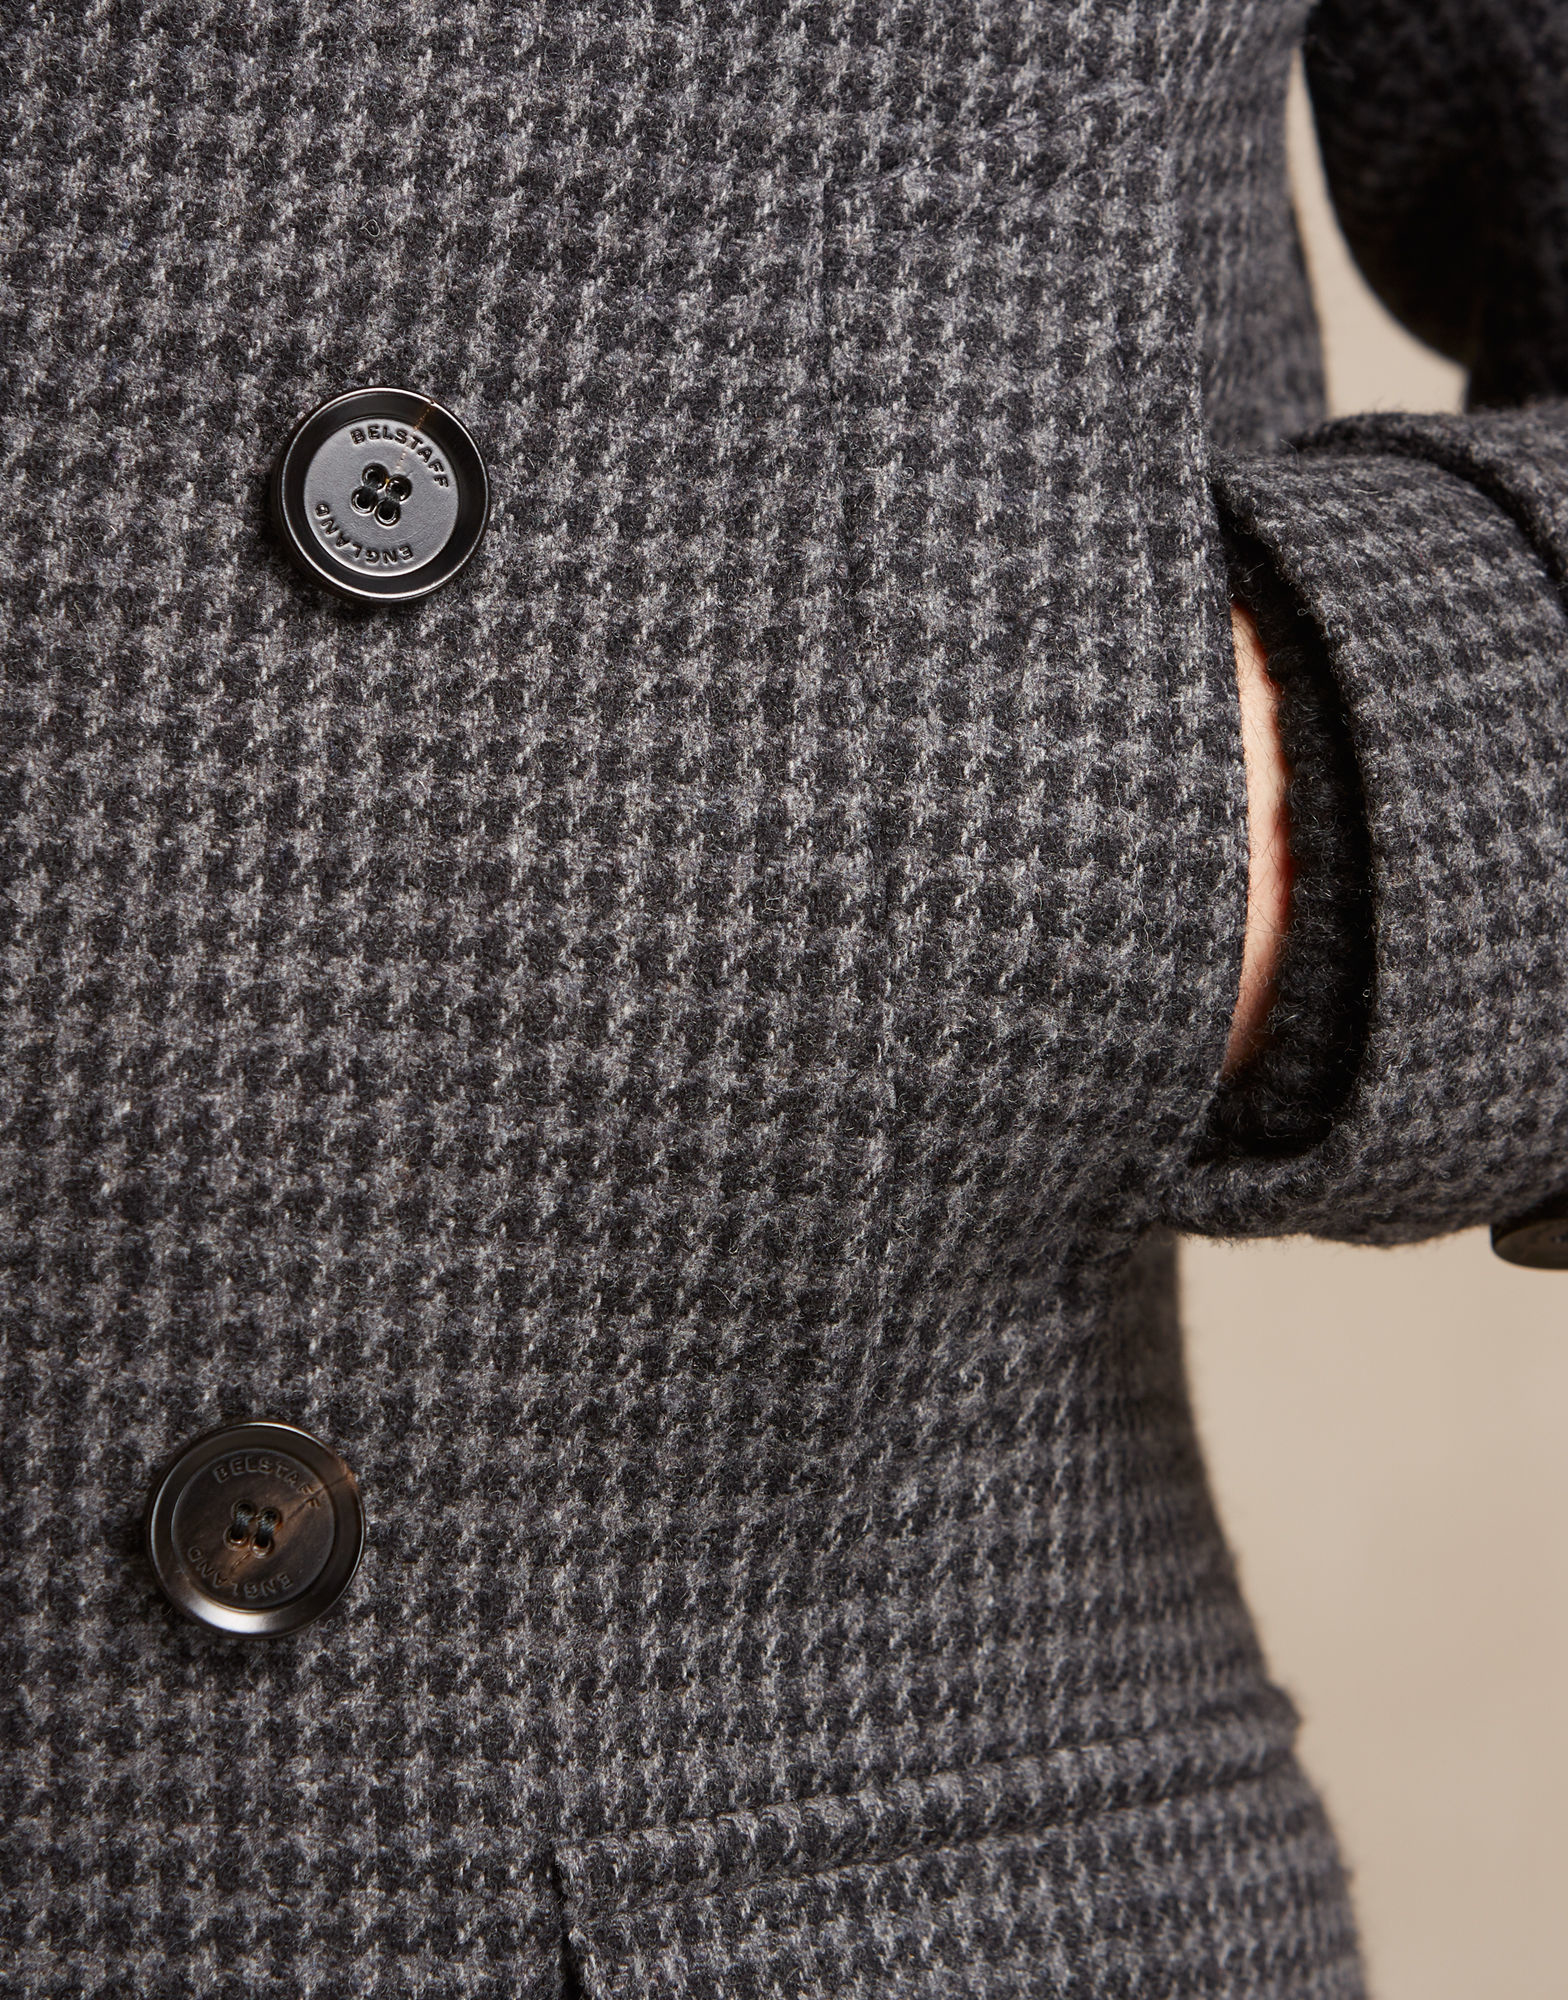 Belstaff Milford Coat In Black/charcoal Tweed for Men - Lyst